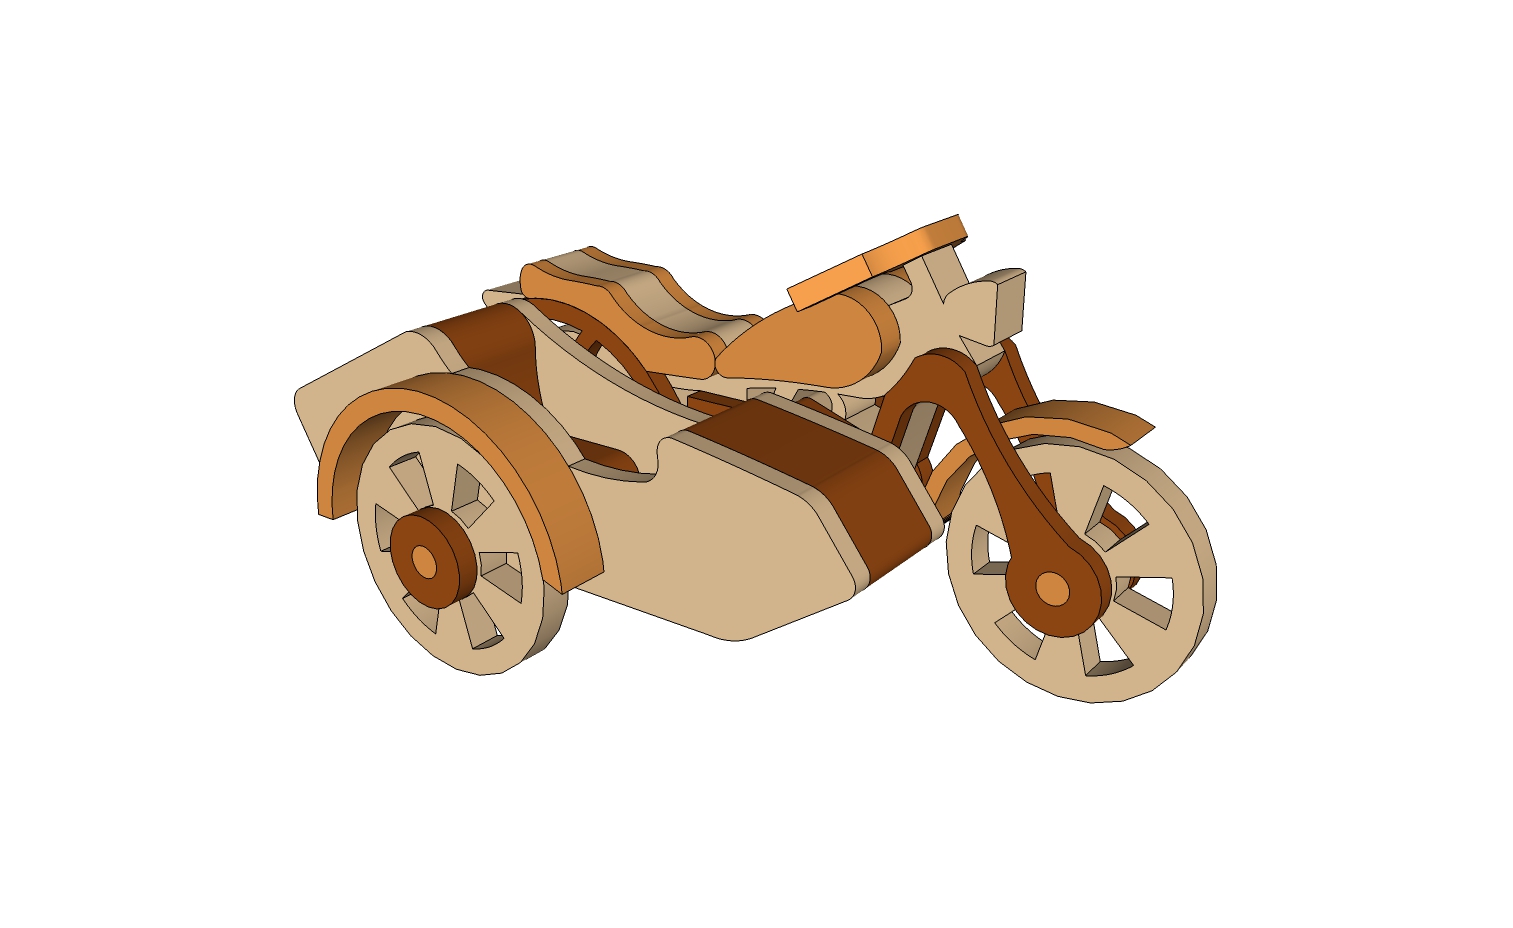 Sidecar Motorcycle Plans Dm Idea